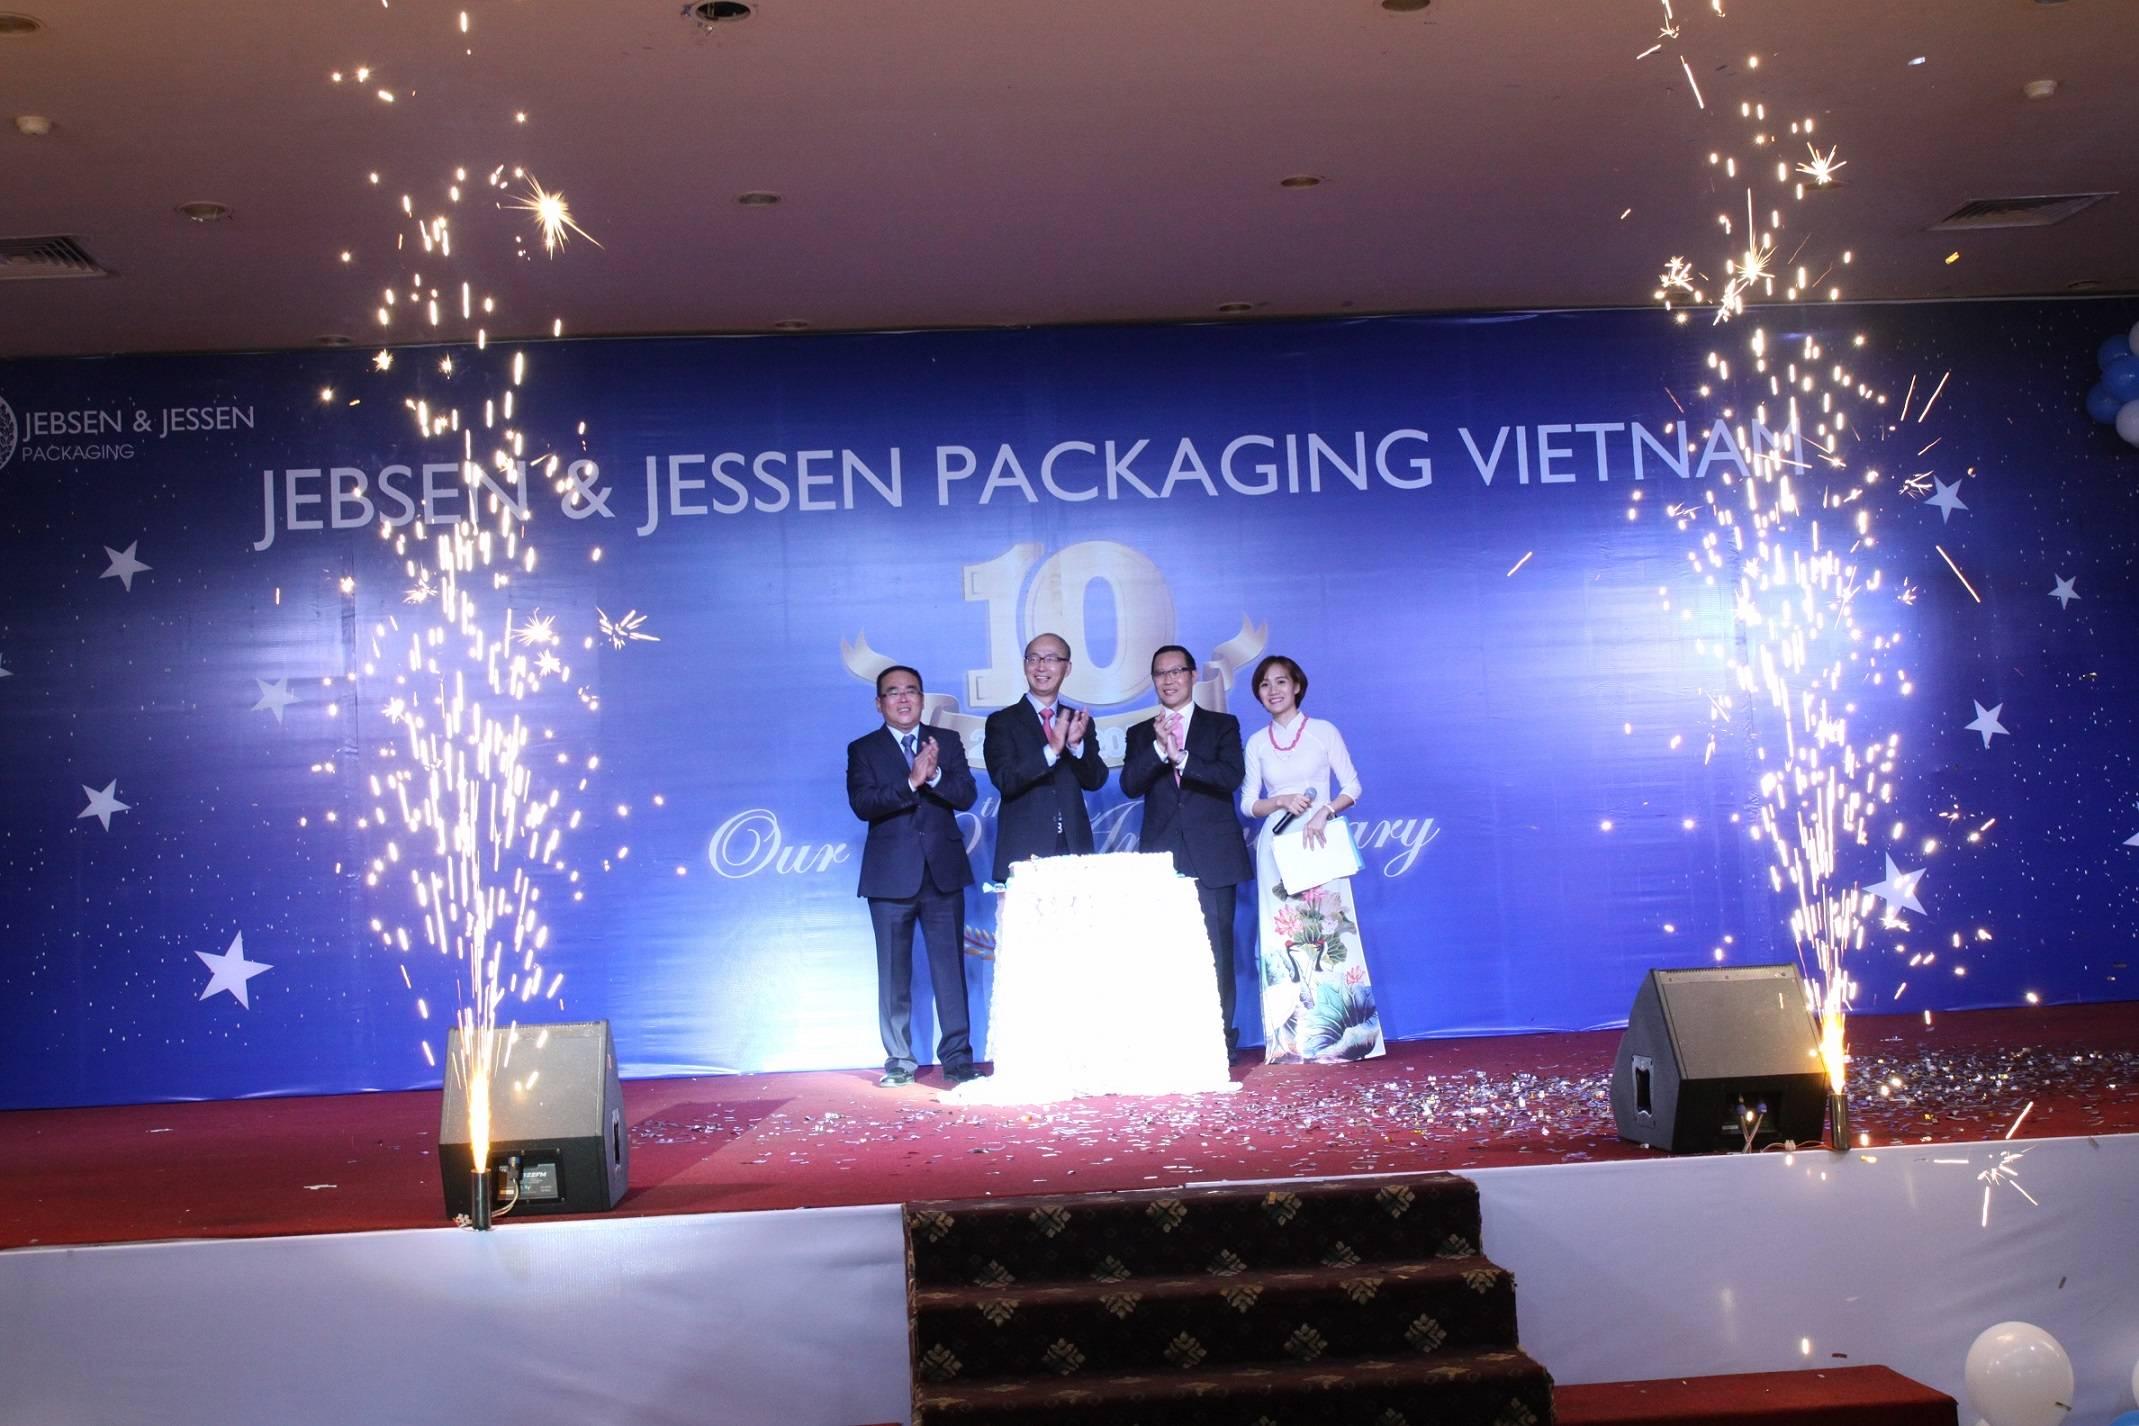 Jebsen & Jessen Packaging Vietnam CO., LTD